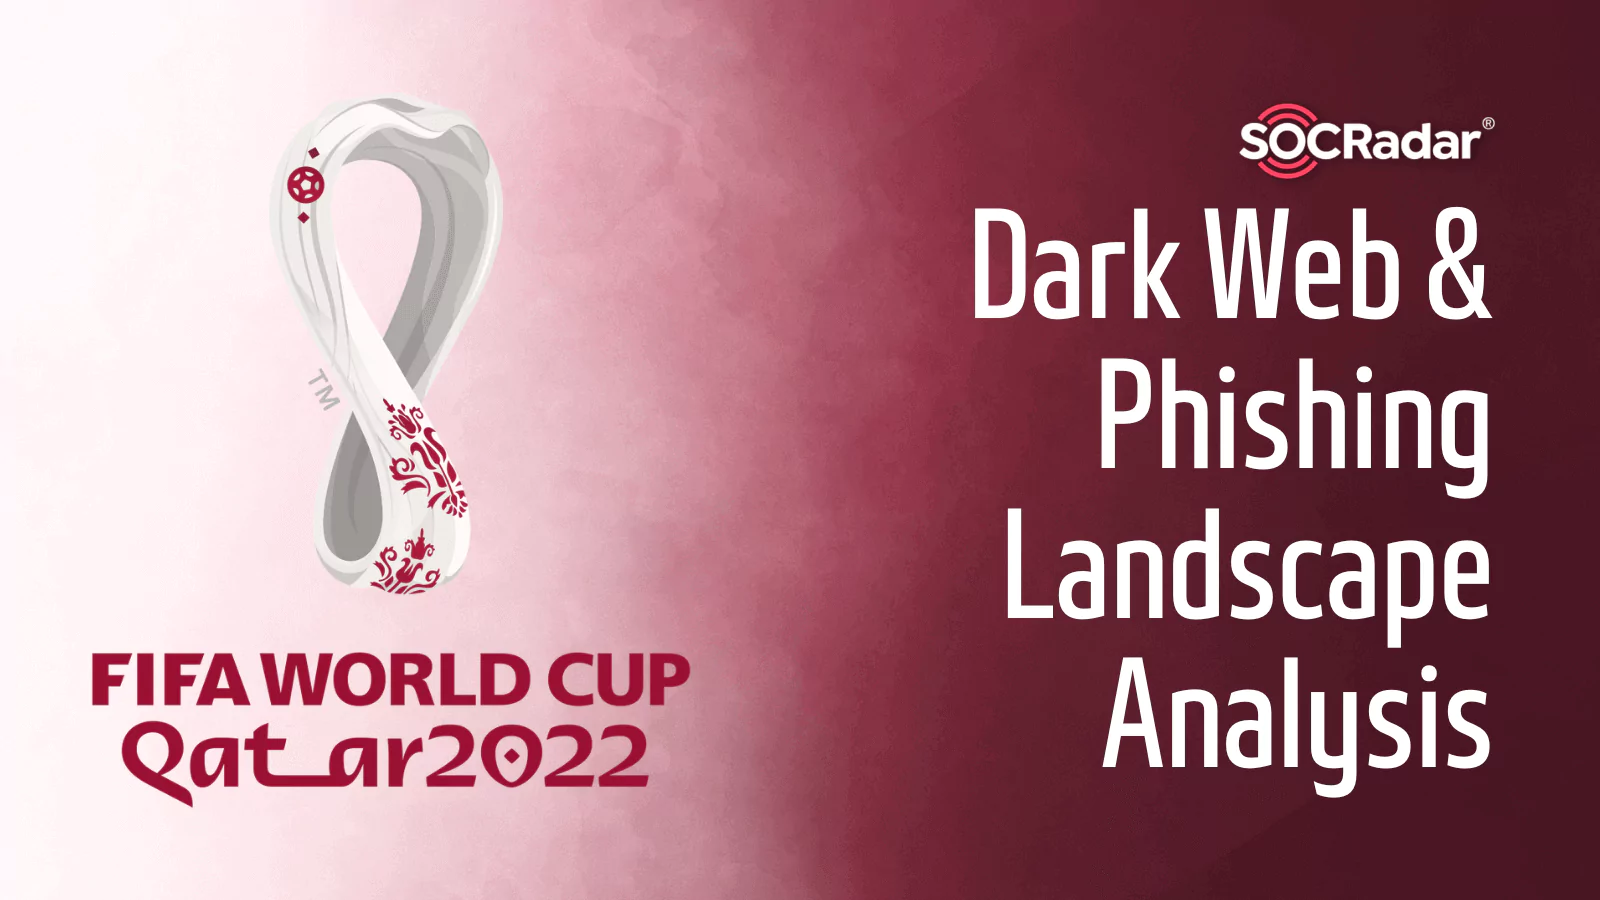 fifa world cup 2022 website